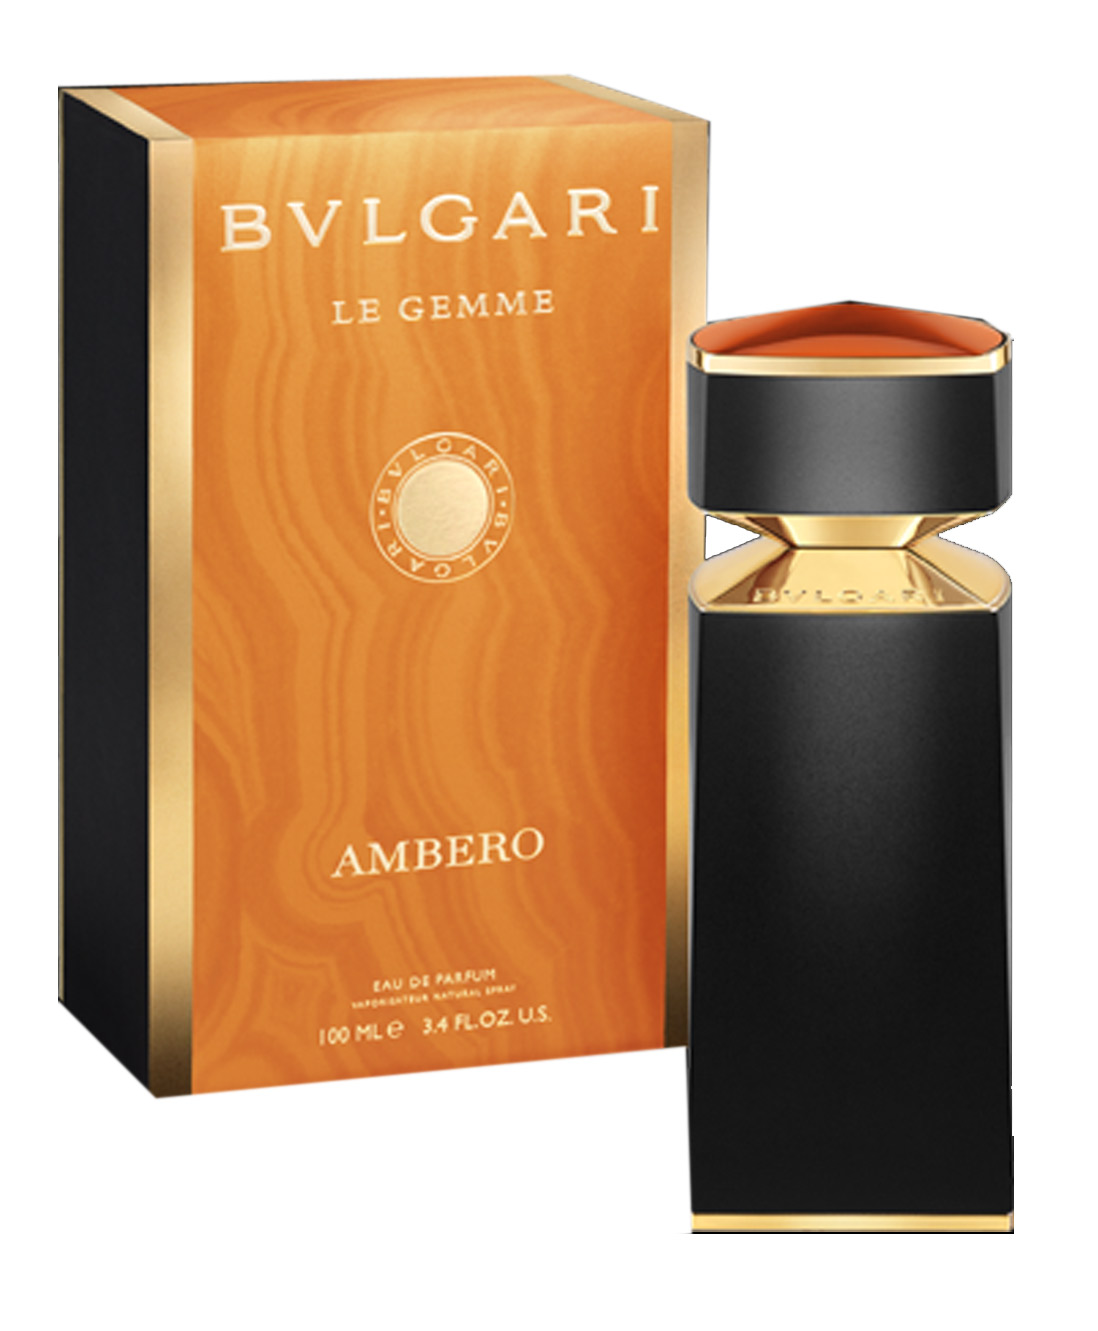 Ambero Bvlgari κολόνια - ένα νέο άρωμα για άνδρες 2016